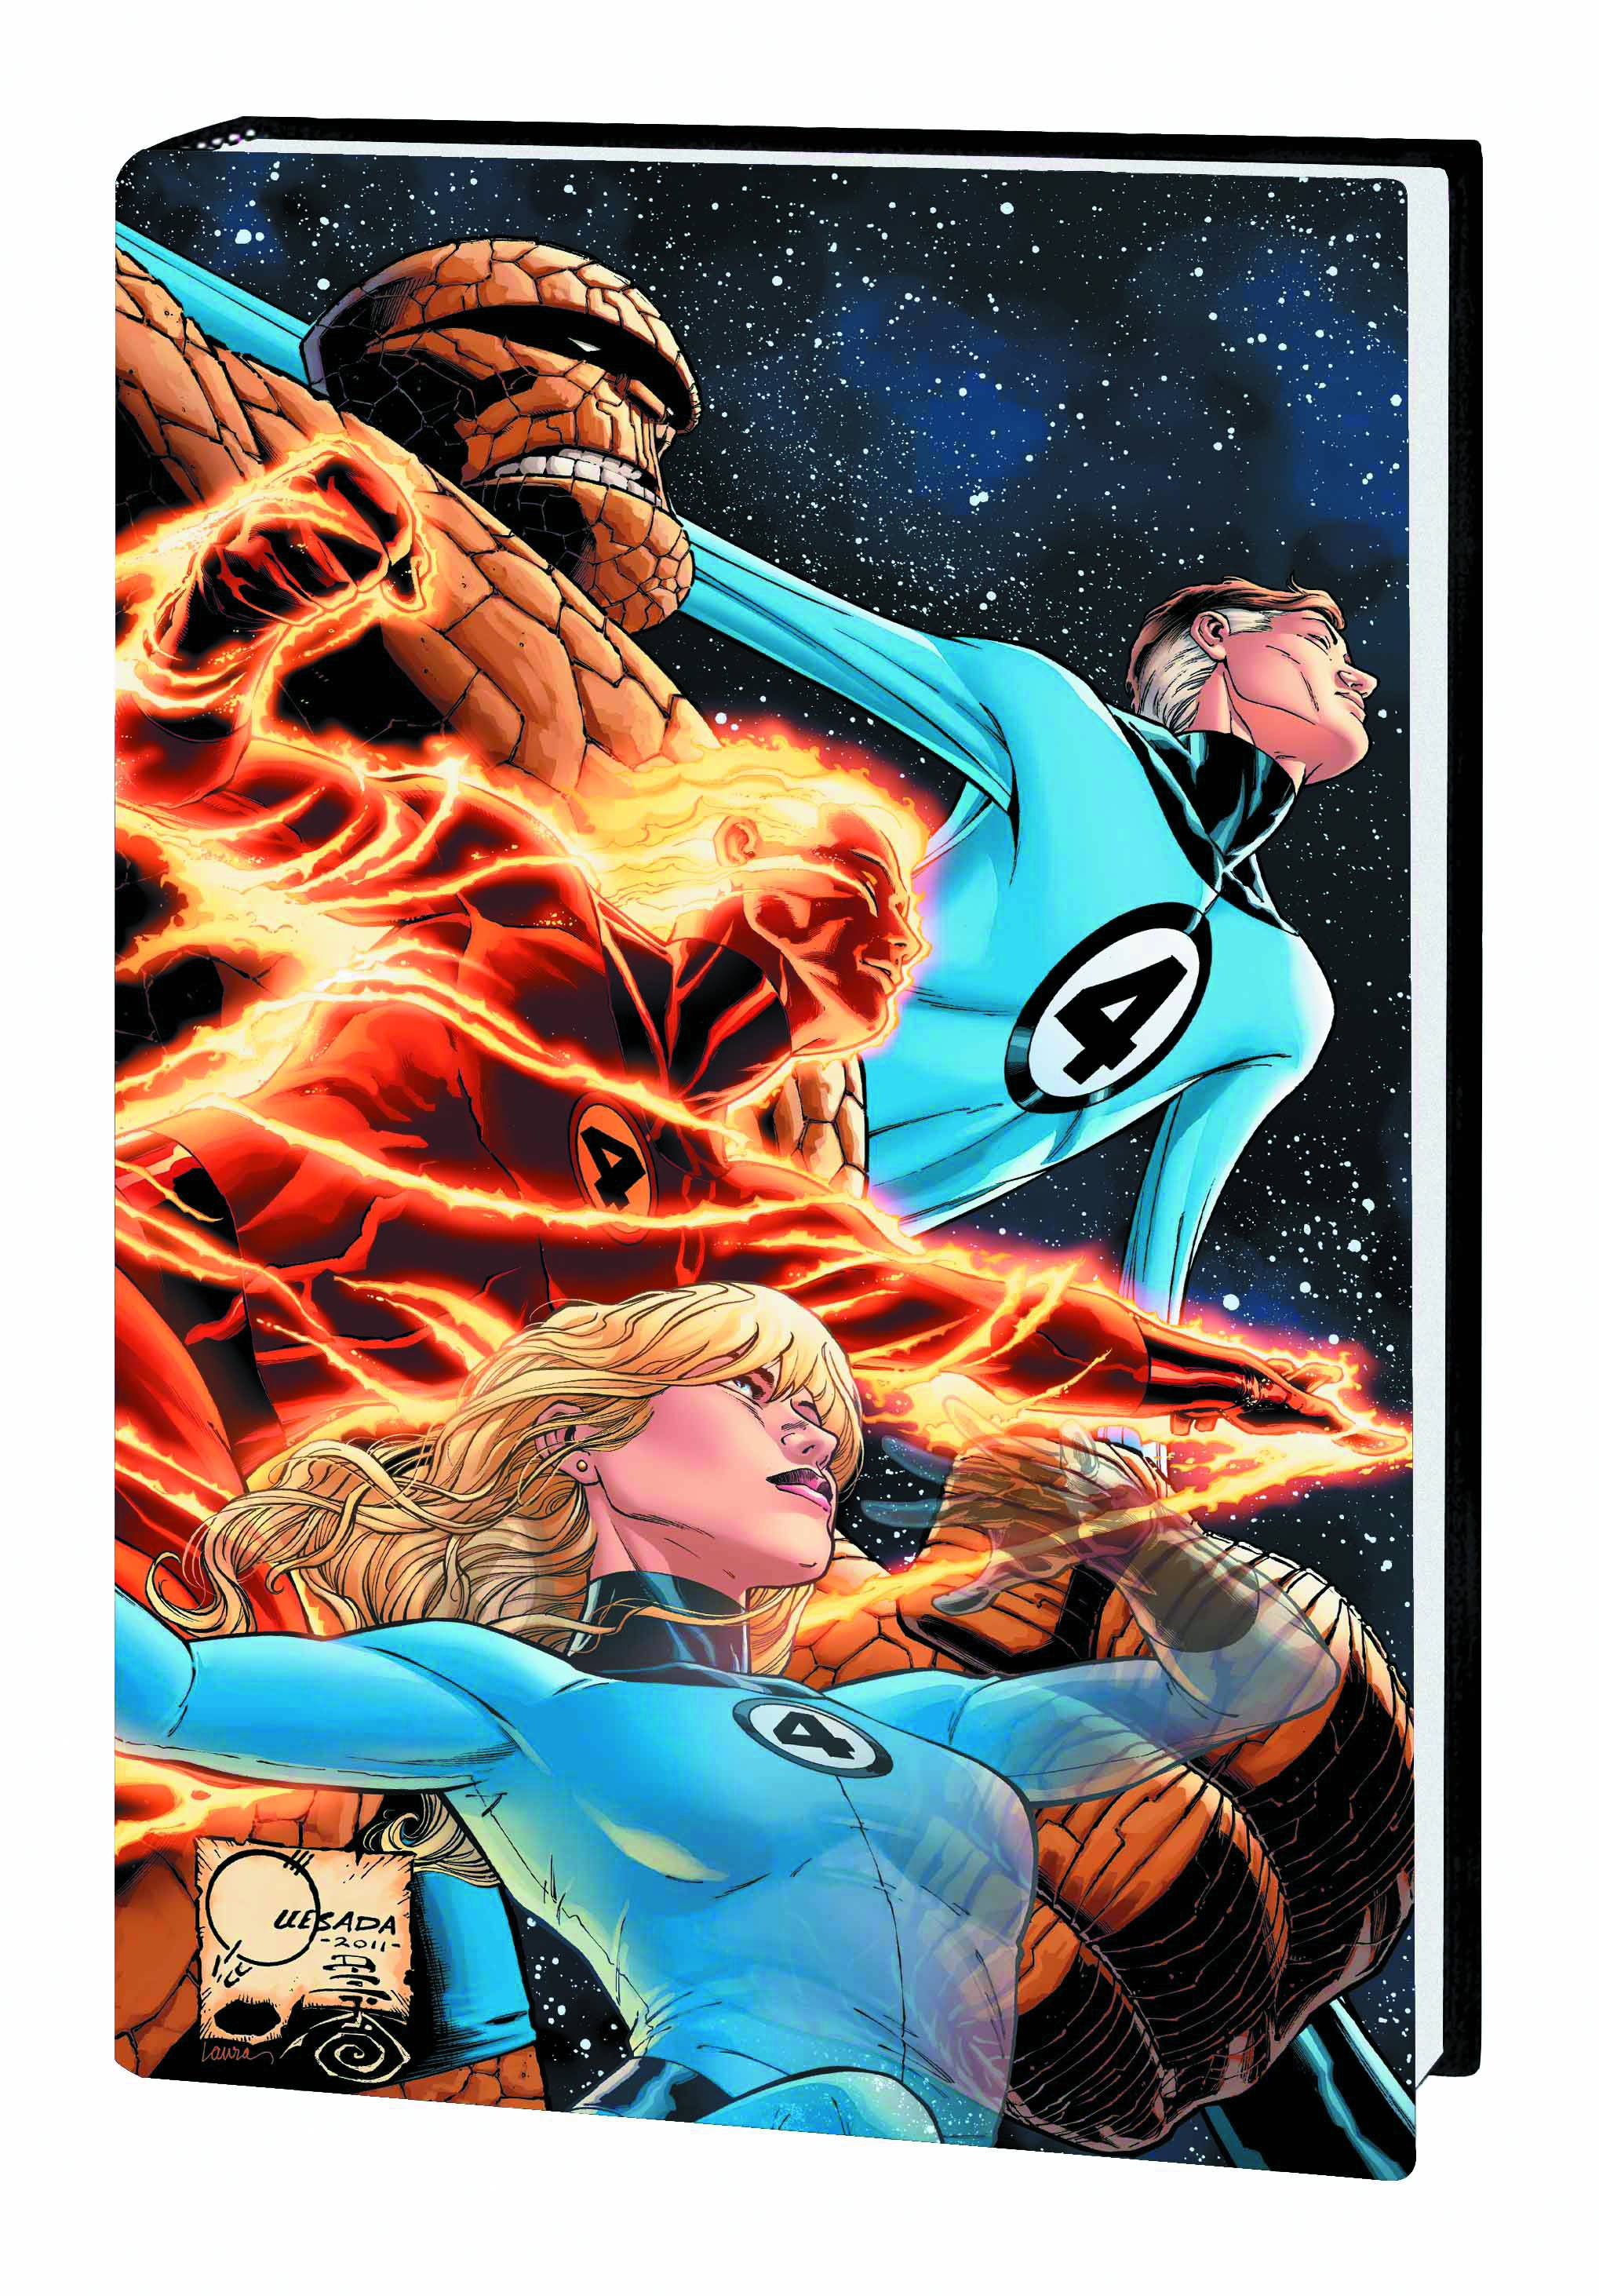 Fantastic Four, Volume 5 by Jonathan Hickman